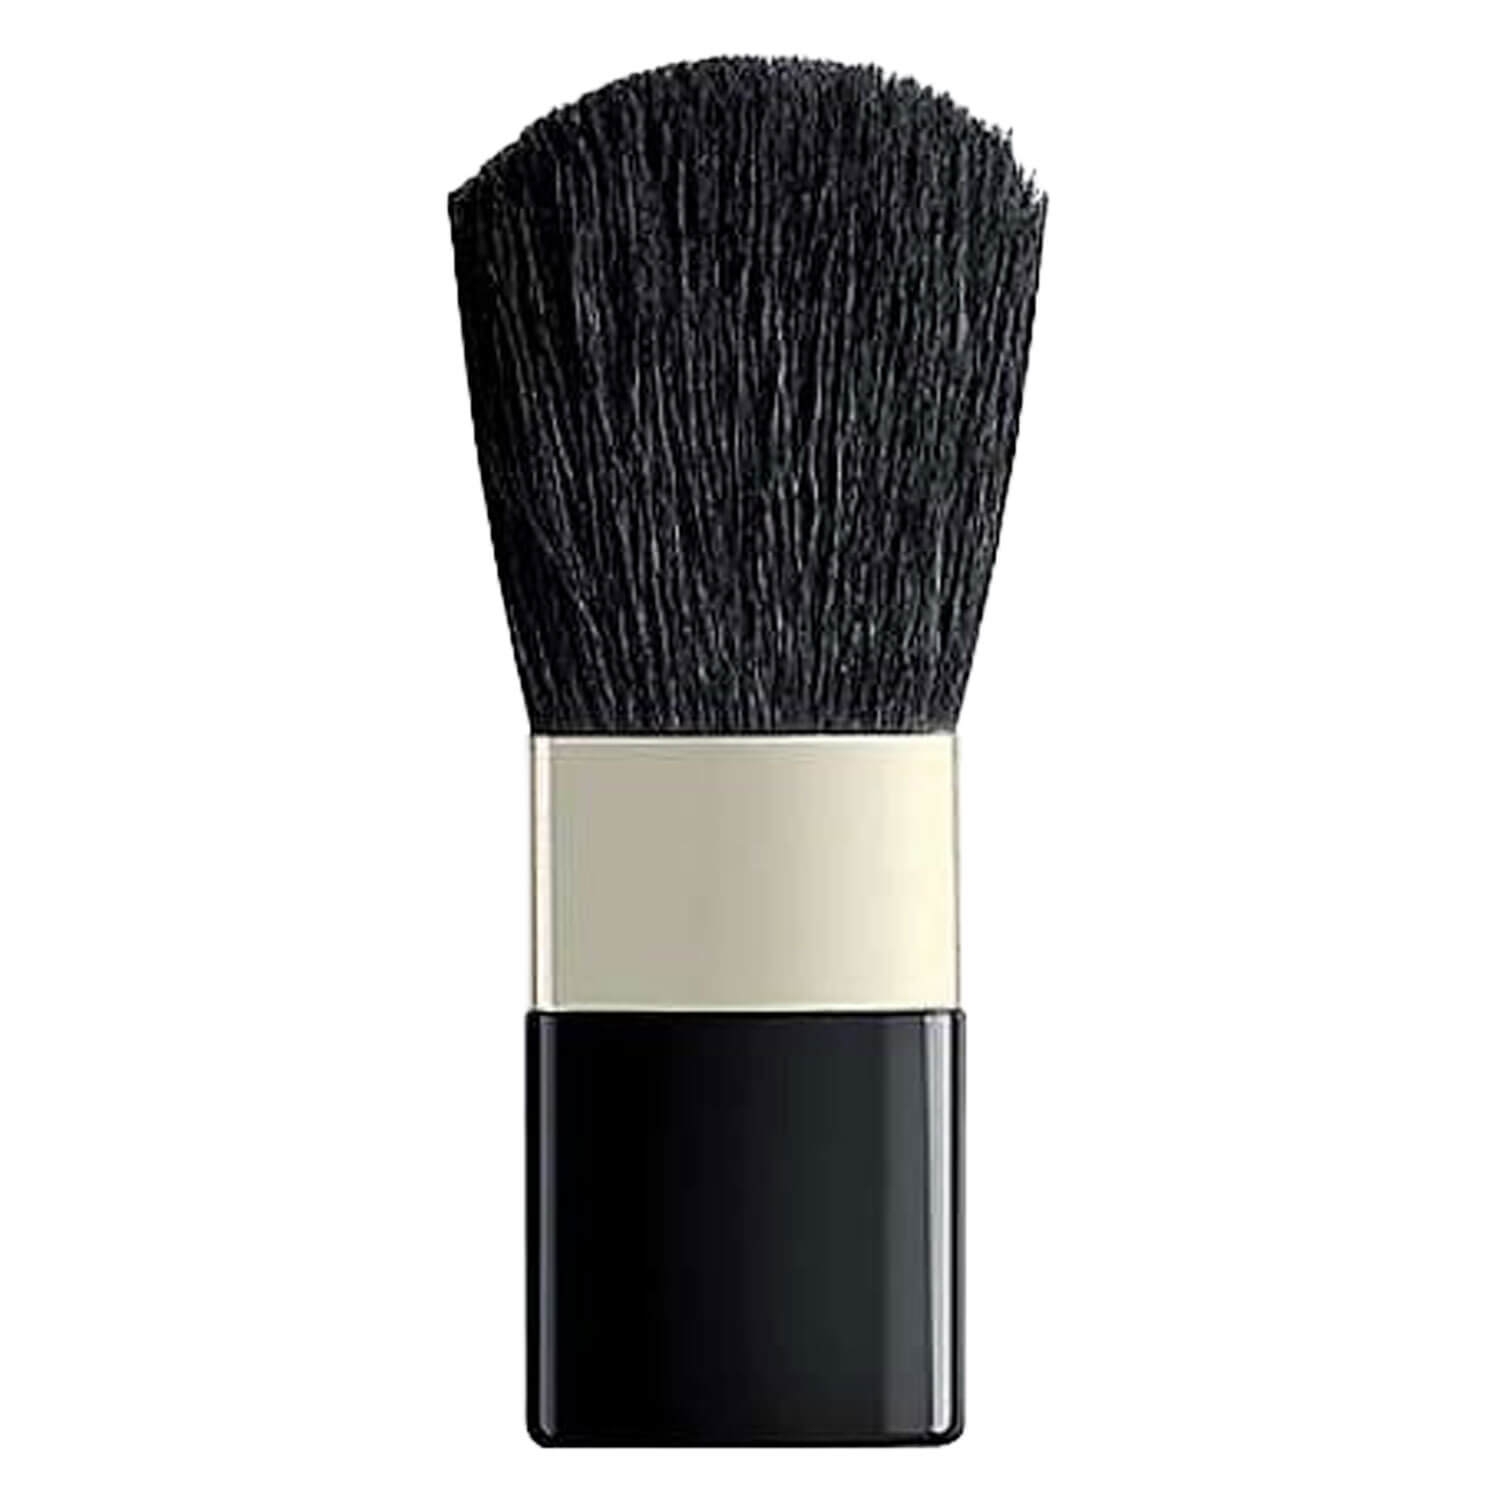 Produktbild von Artdeco Tools - Blusher Brush for Beauty Box